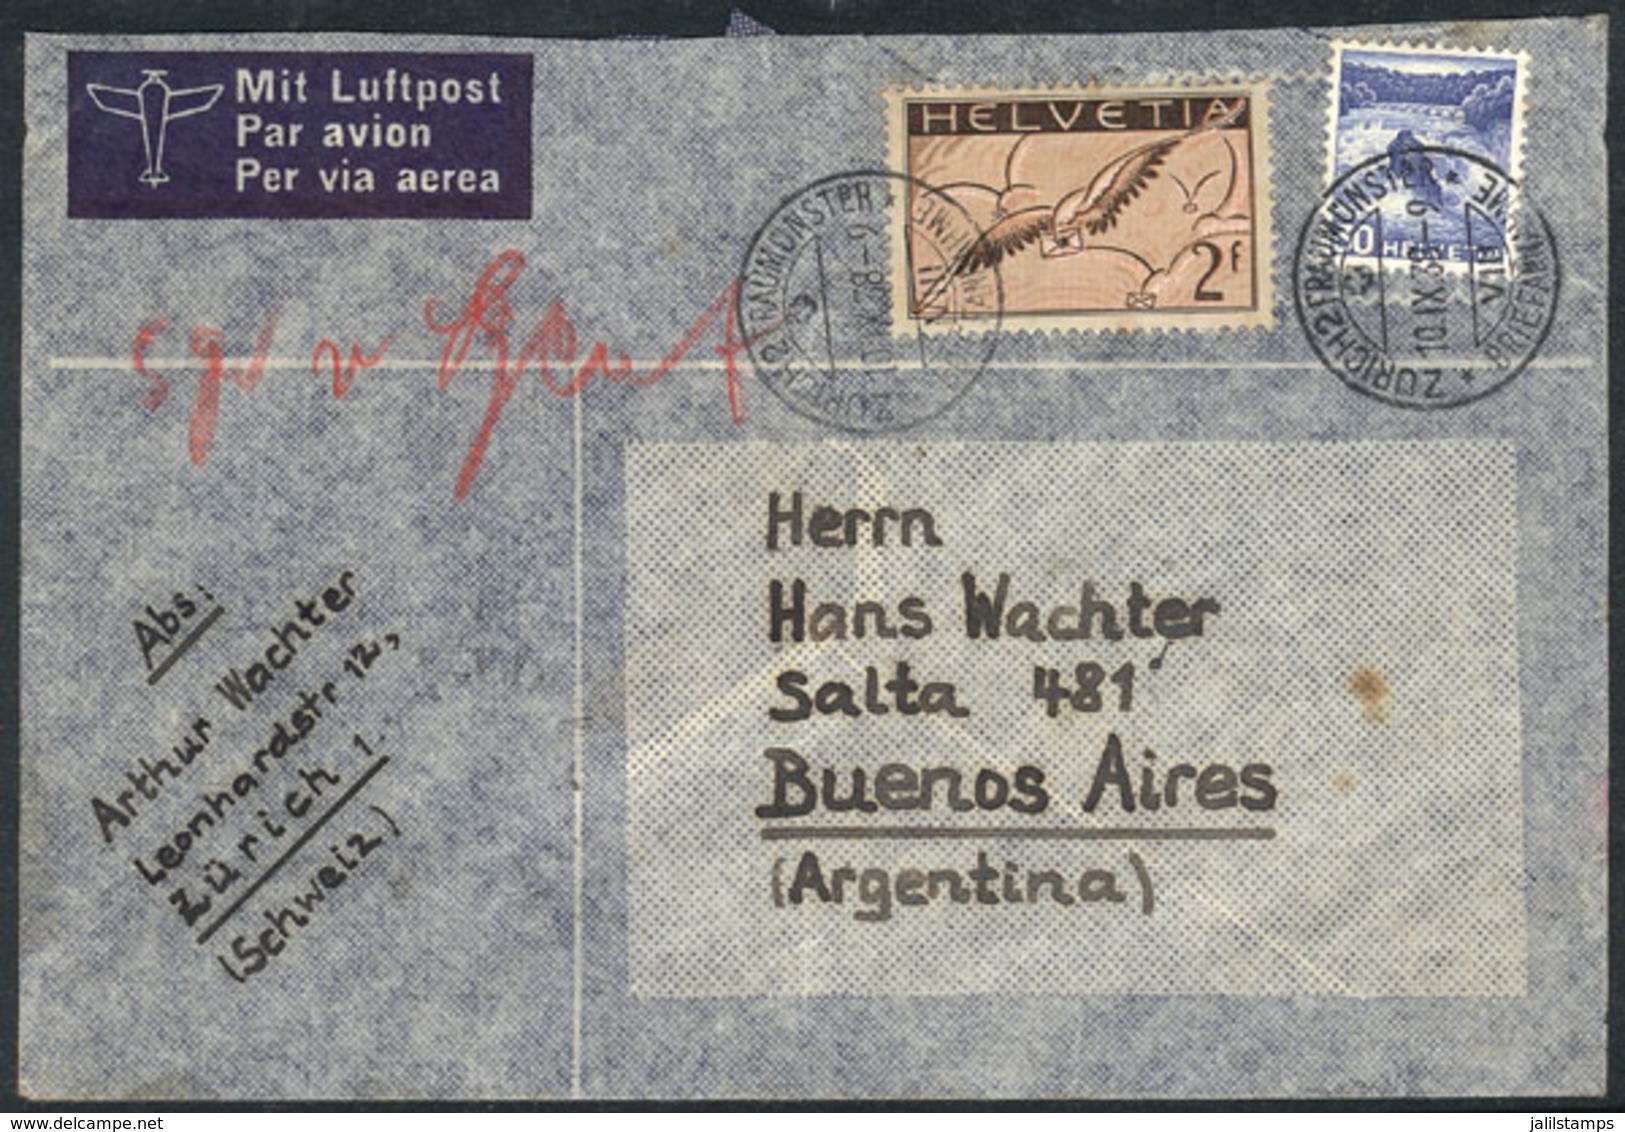 885 SWITZERLAND: Airmail Cover Franked With 2.30Fr., Sent From Zürich To Argentina On 10/SE/1938, VF! - ...-1845 Préphilatélie